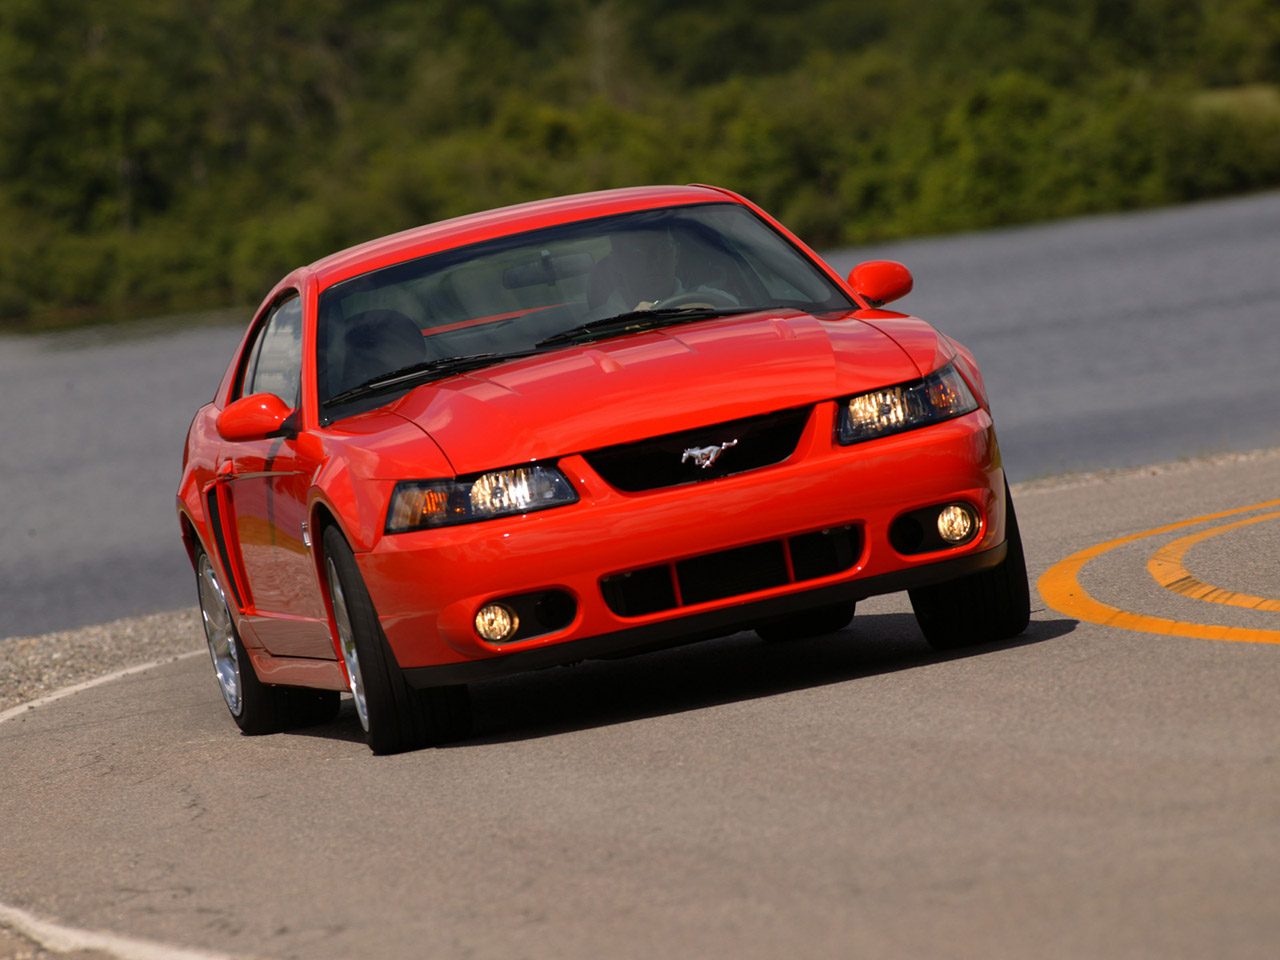 2004-Ford-SVT-Mustang-Cobra-Red-Curve-1280x960.jpg